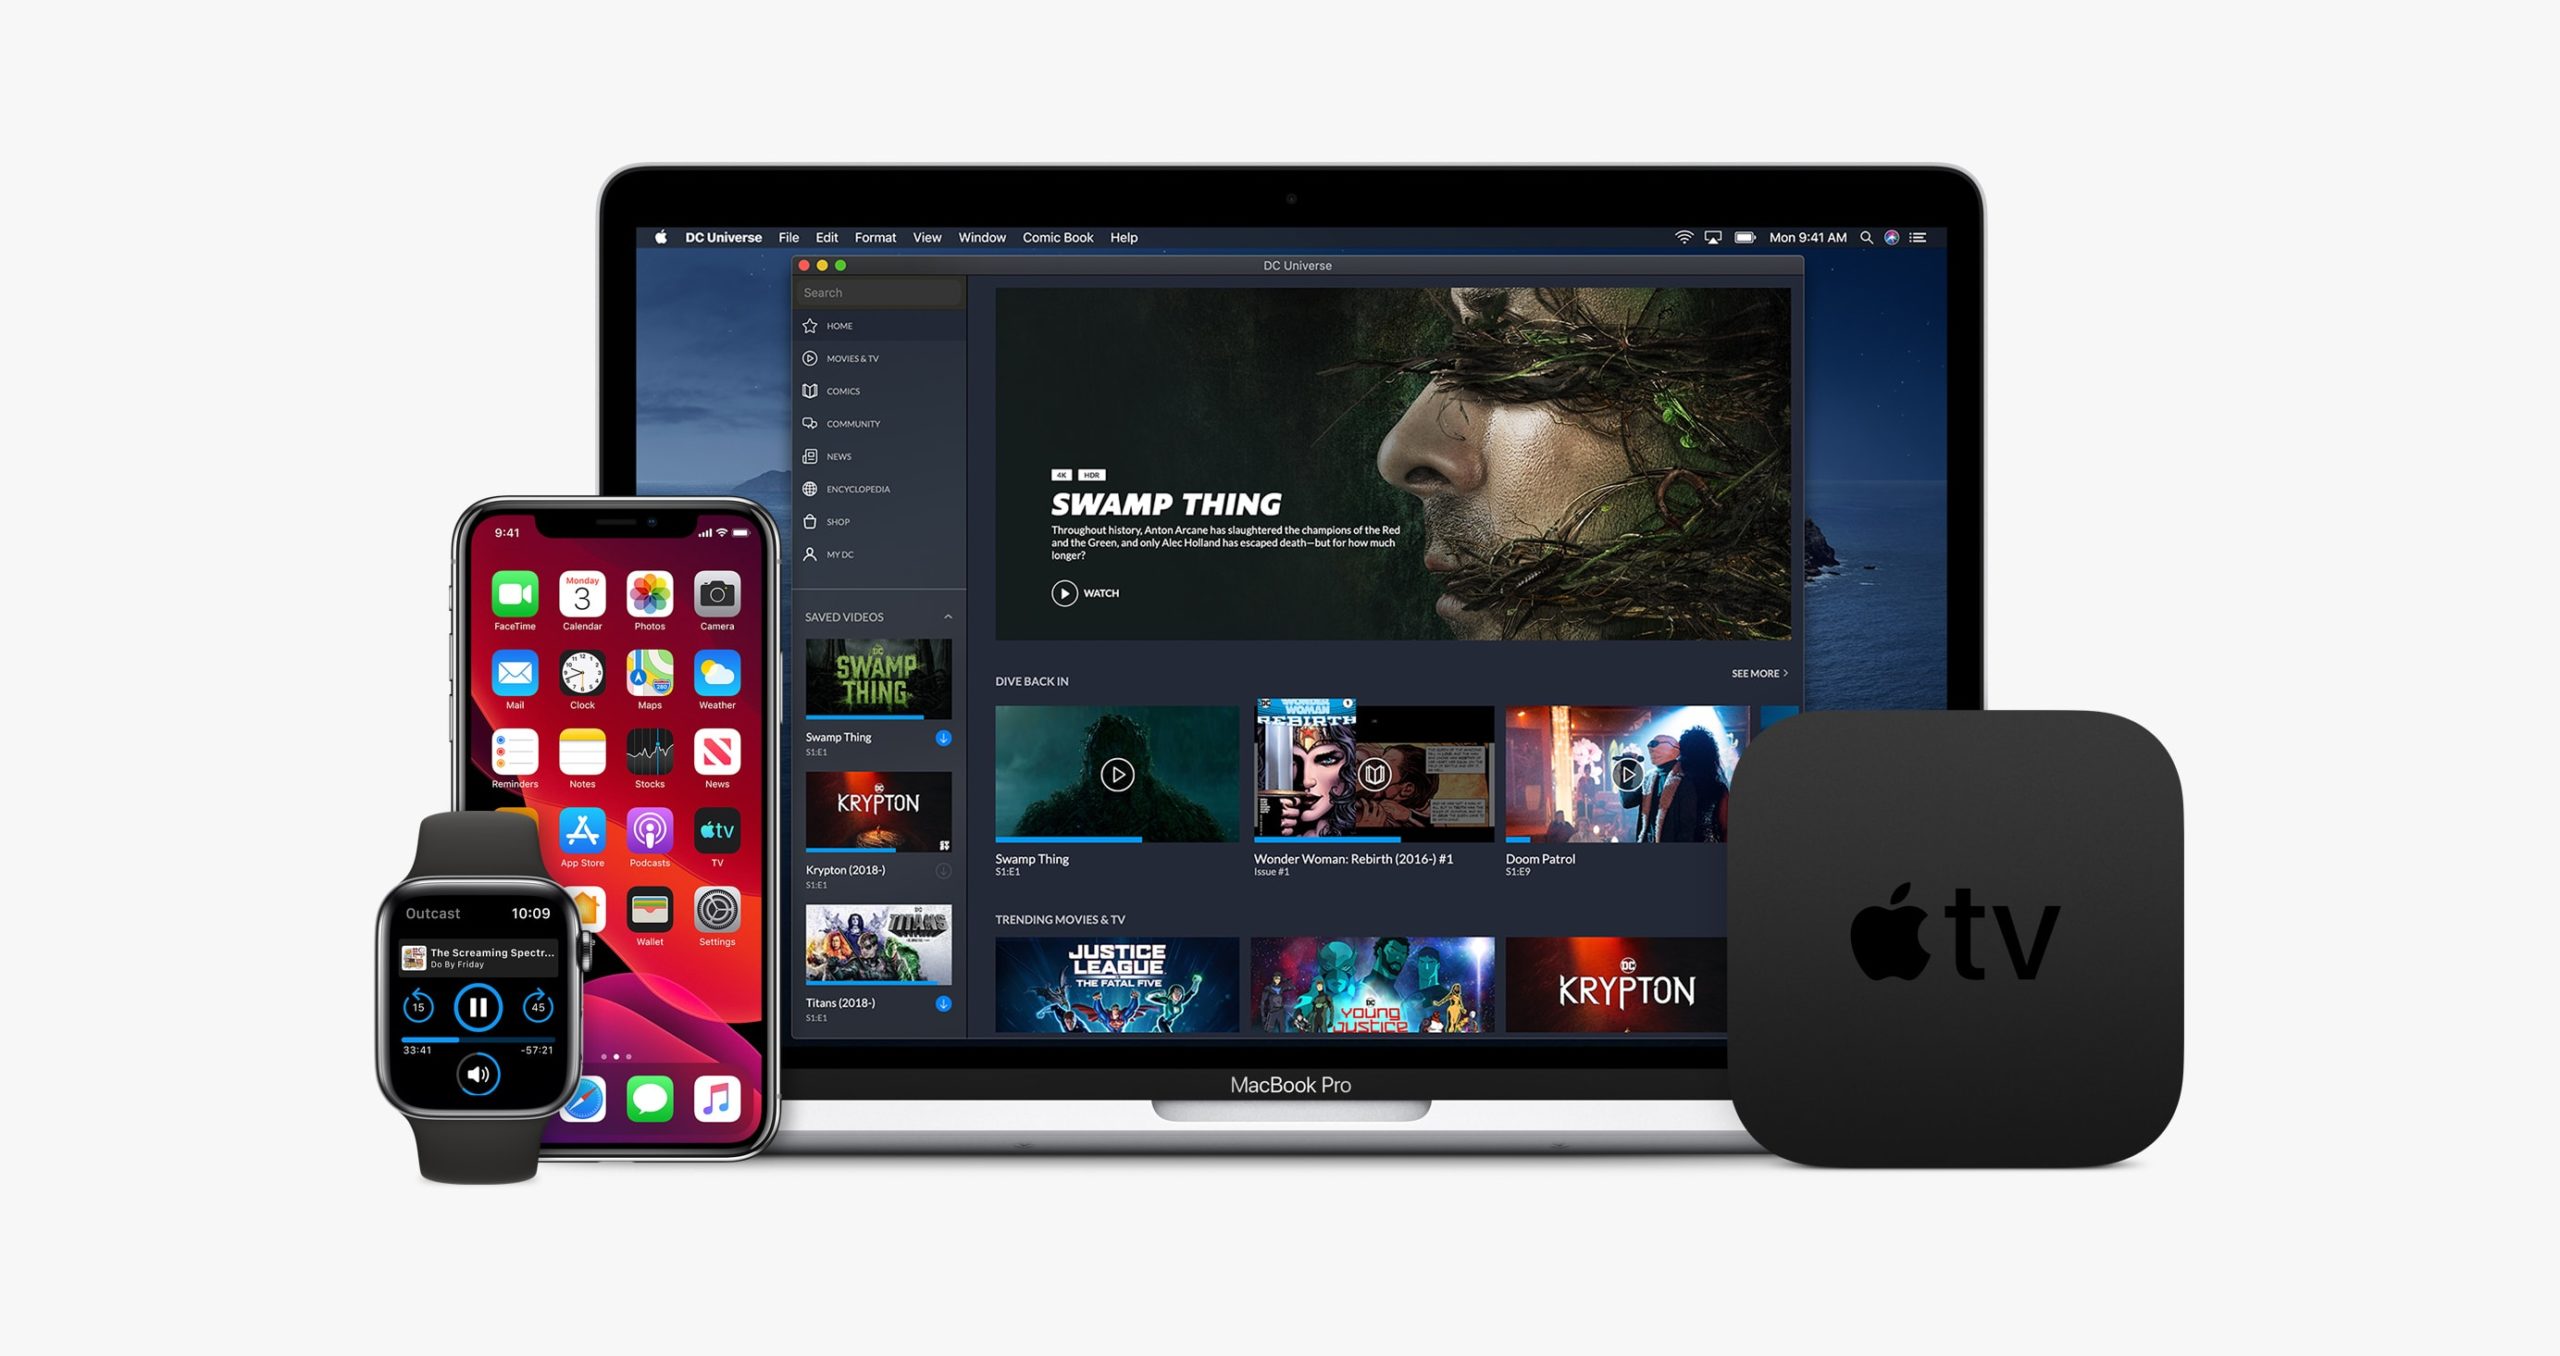 Dispositivos da Apple - Apple Watch (watchOS 6), iPhone (iOS 13), MacBook Pro (macOS Catalina 10.15) e Apple TV (tvOS 13)